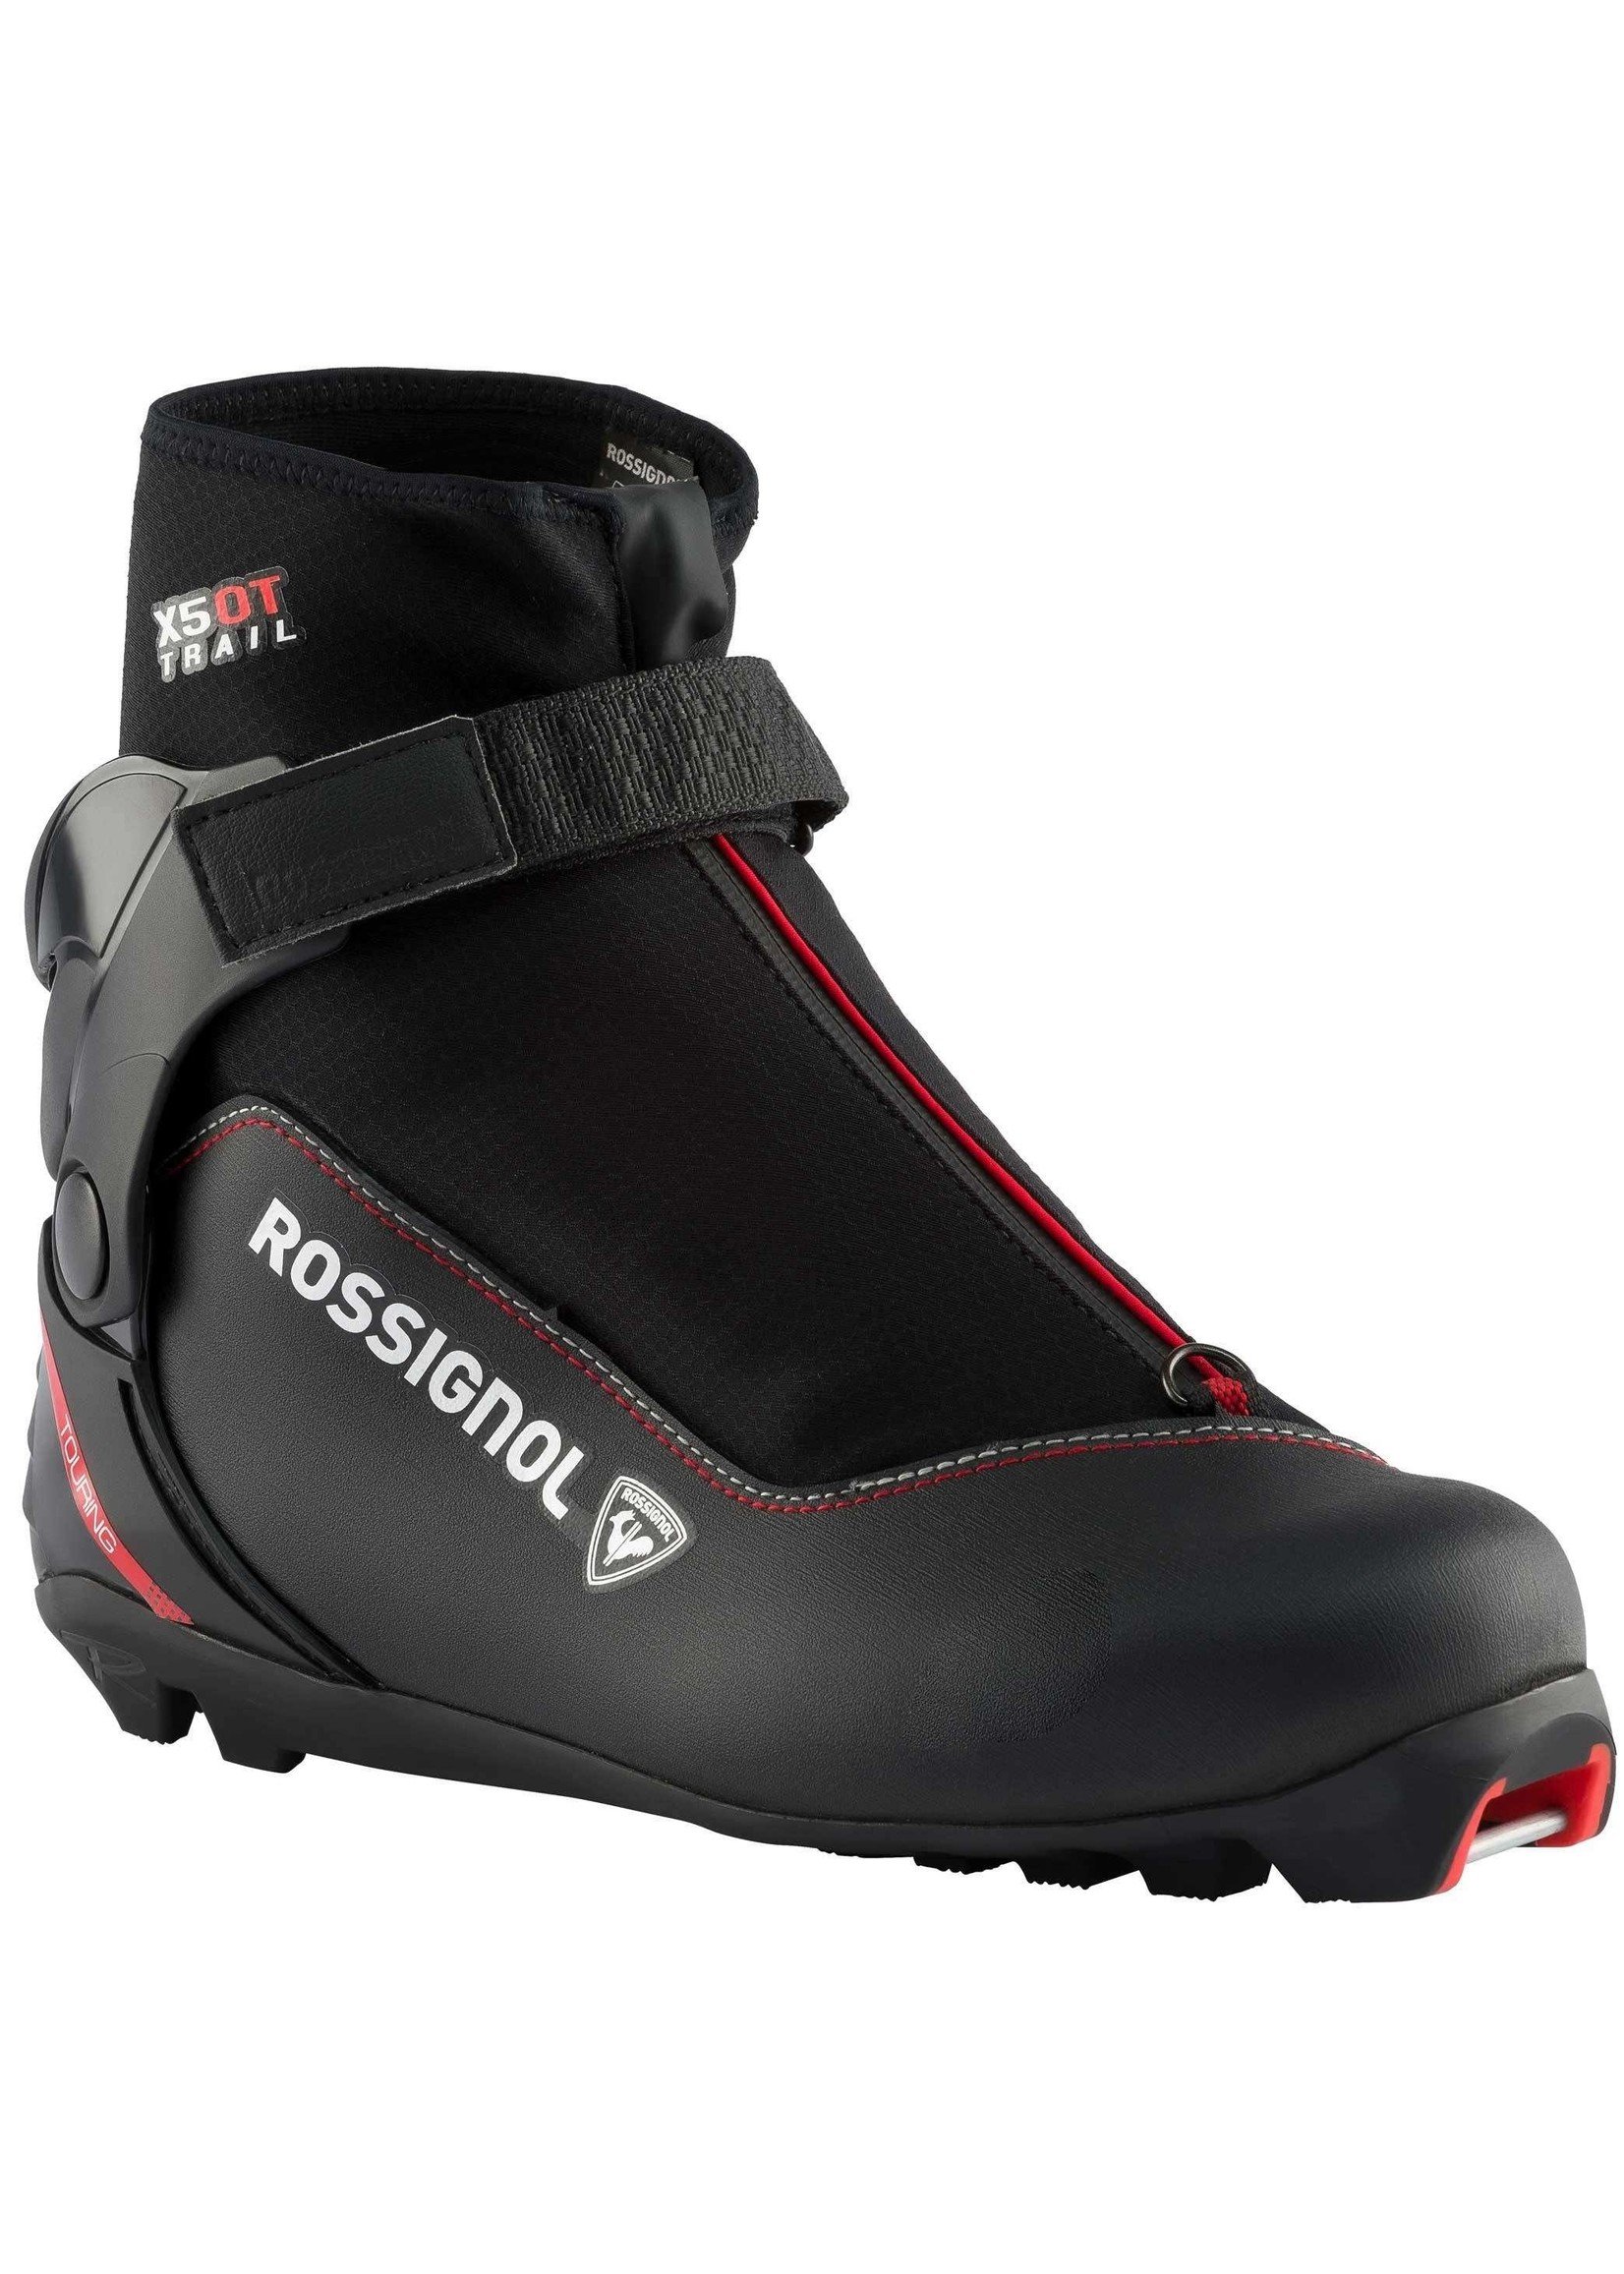 Rossignol Rossignol- X-5 OT Boot